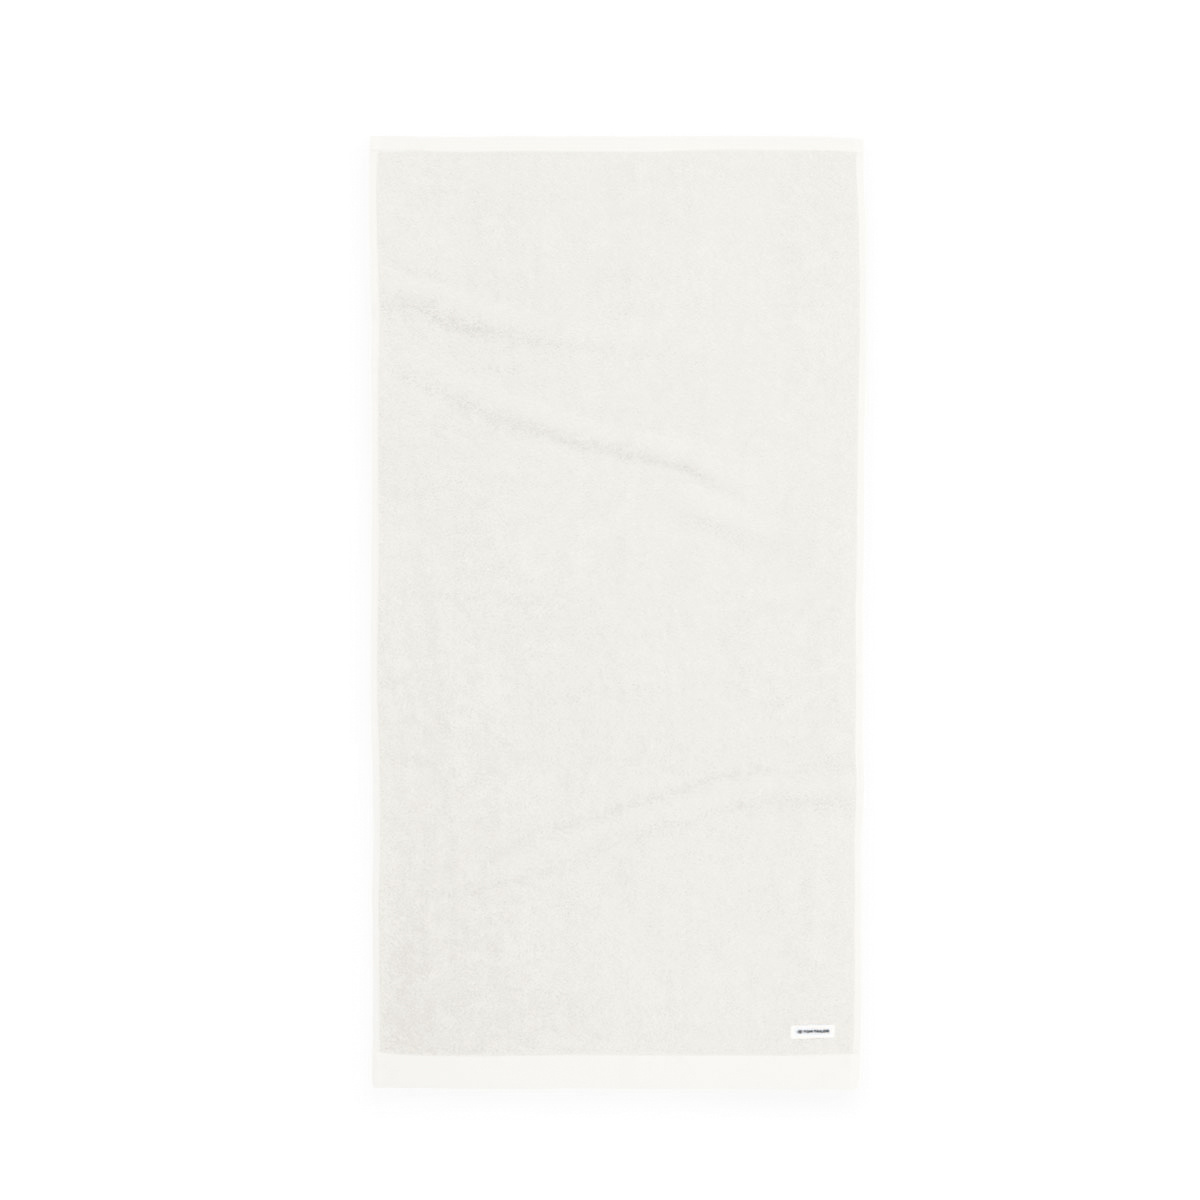 Tom Tailor Ručník Crisp White, 50 x 100 cm